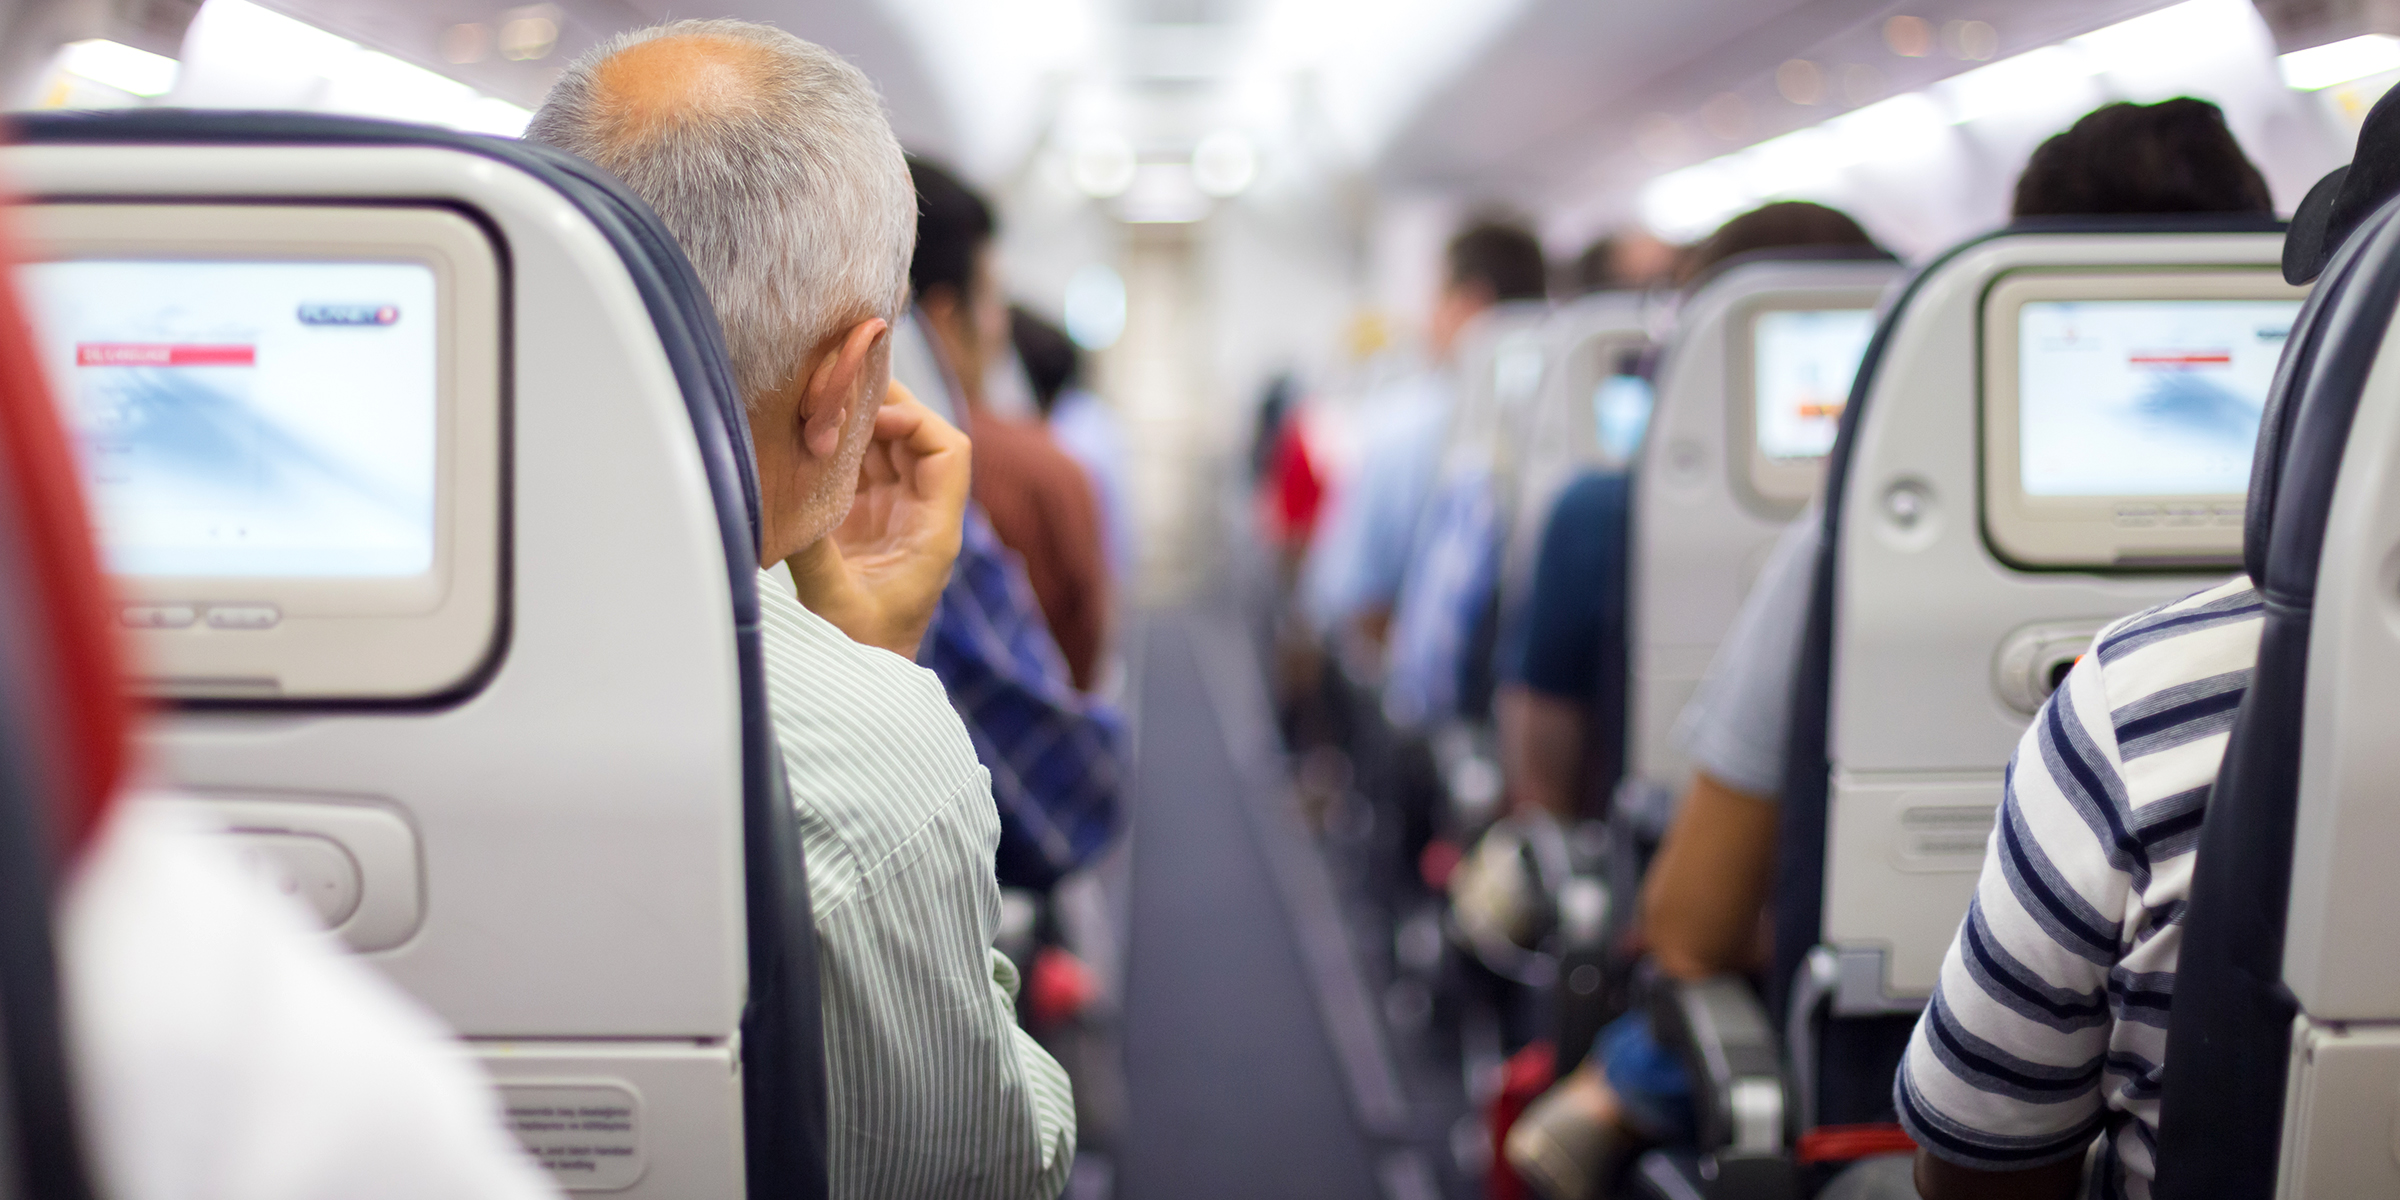 Airplane passengers | Source: Shutterstock